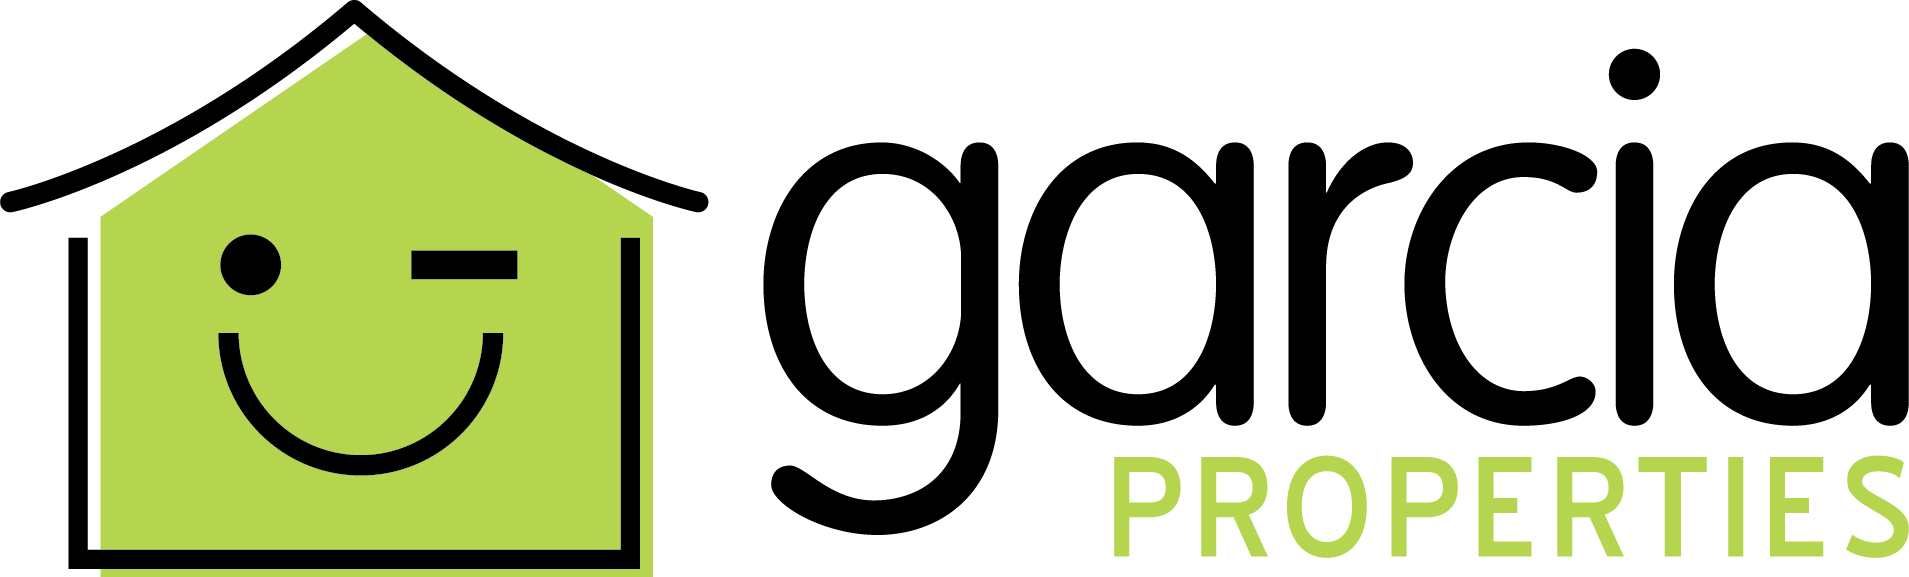 Garcia Properties Company Logo